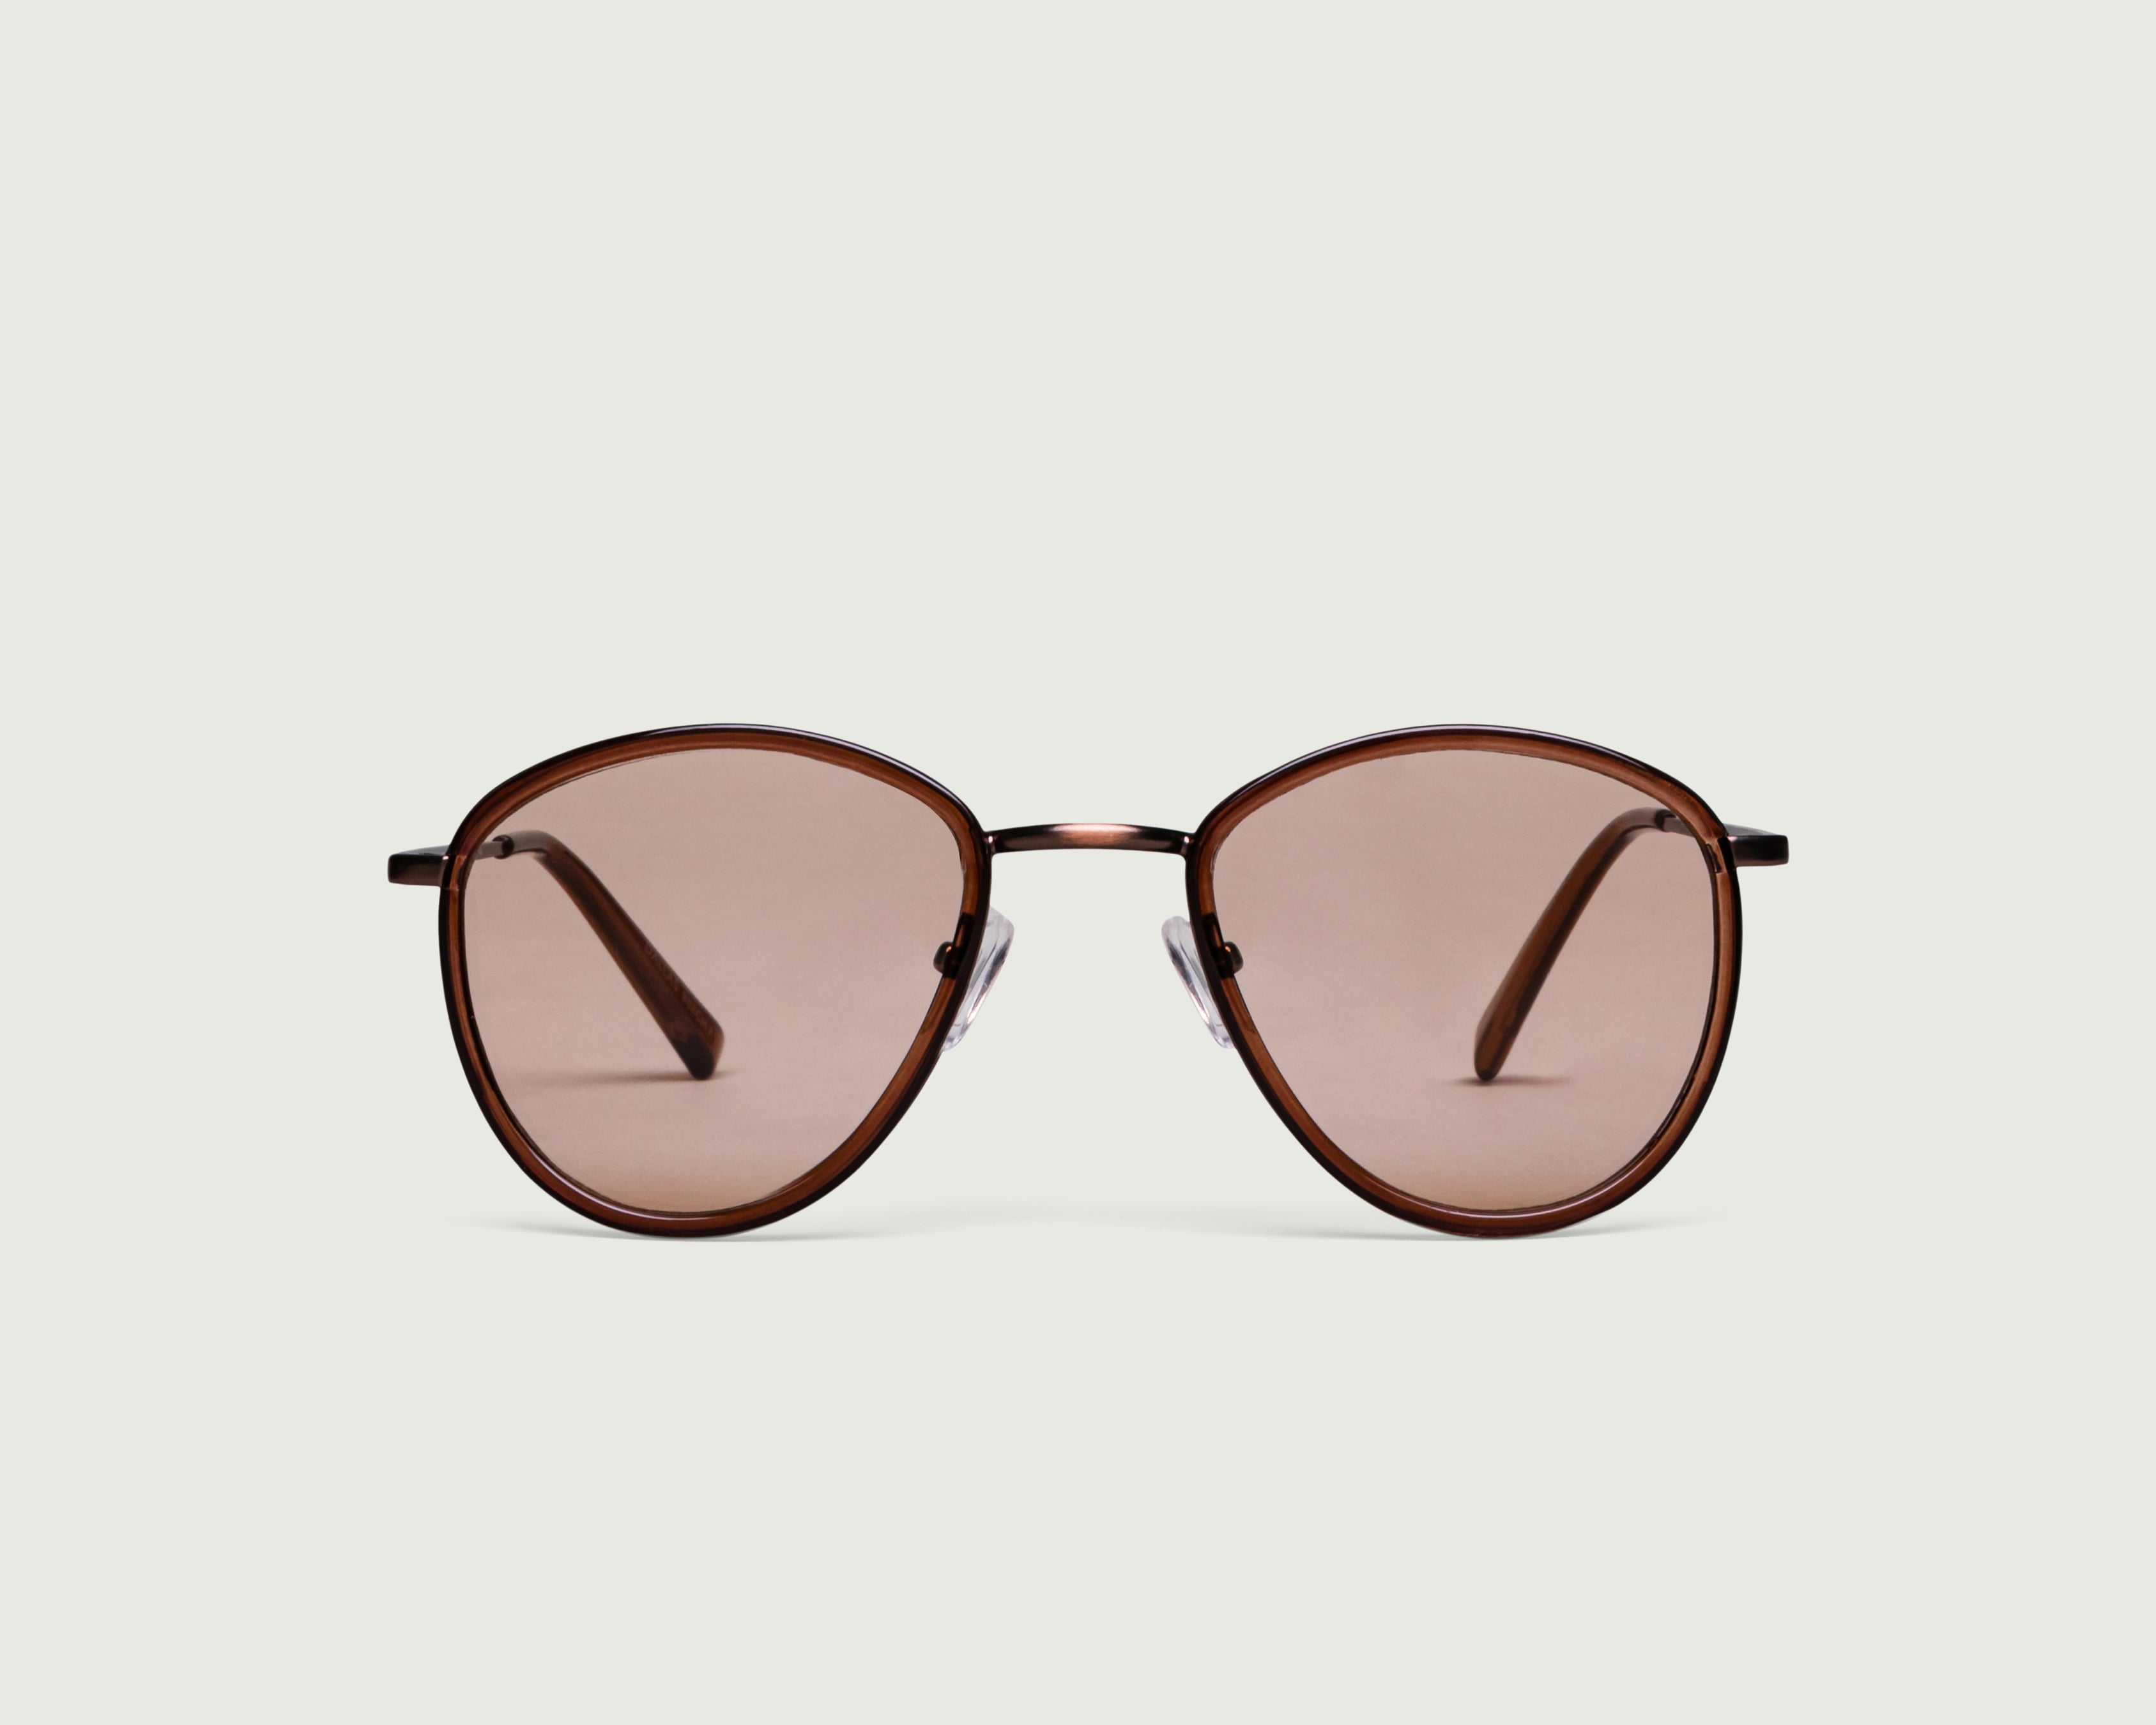 Beech::Dallas Sunglasses pilot brown plastic metal front